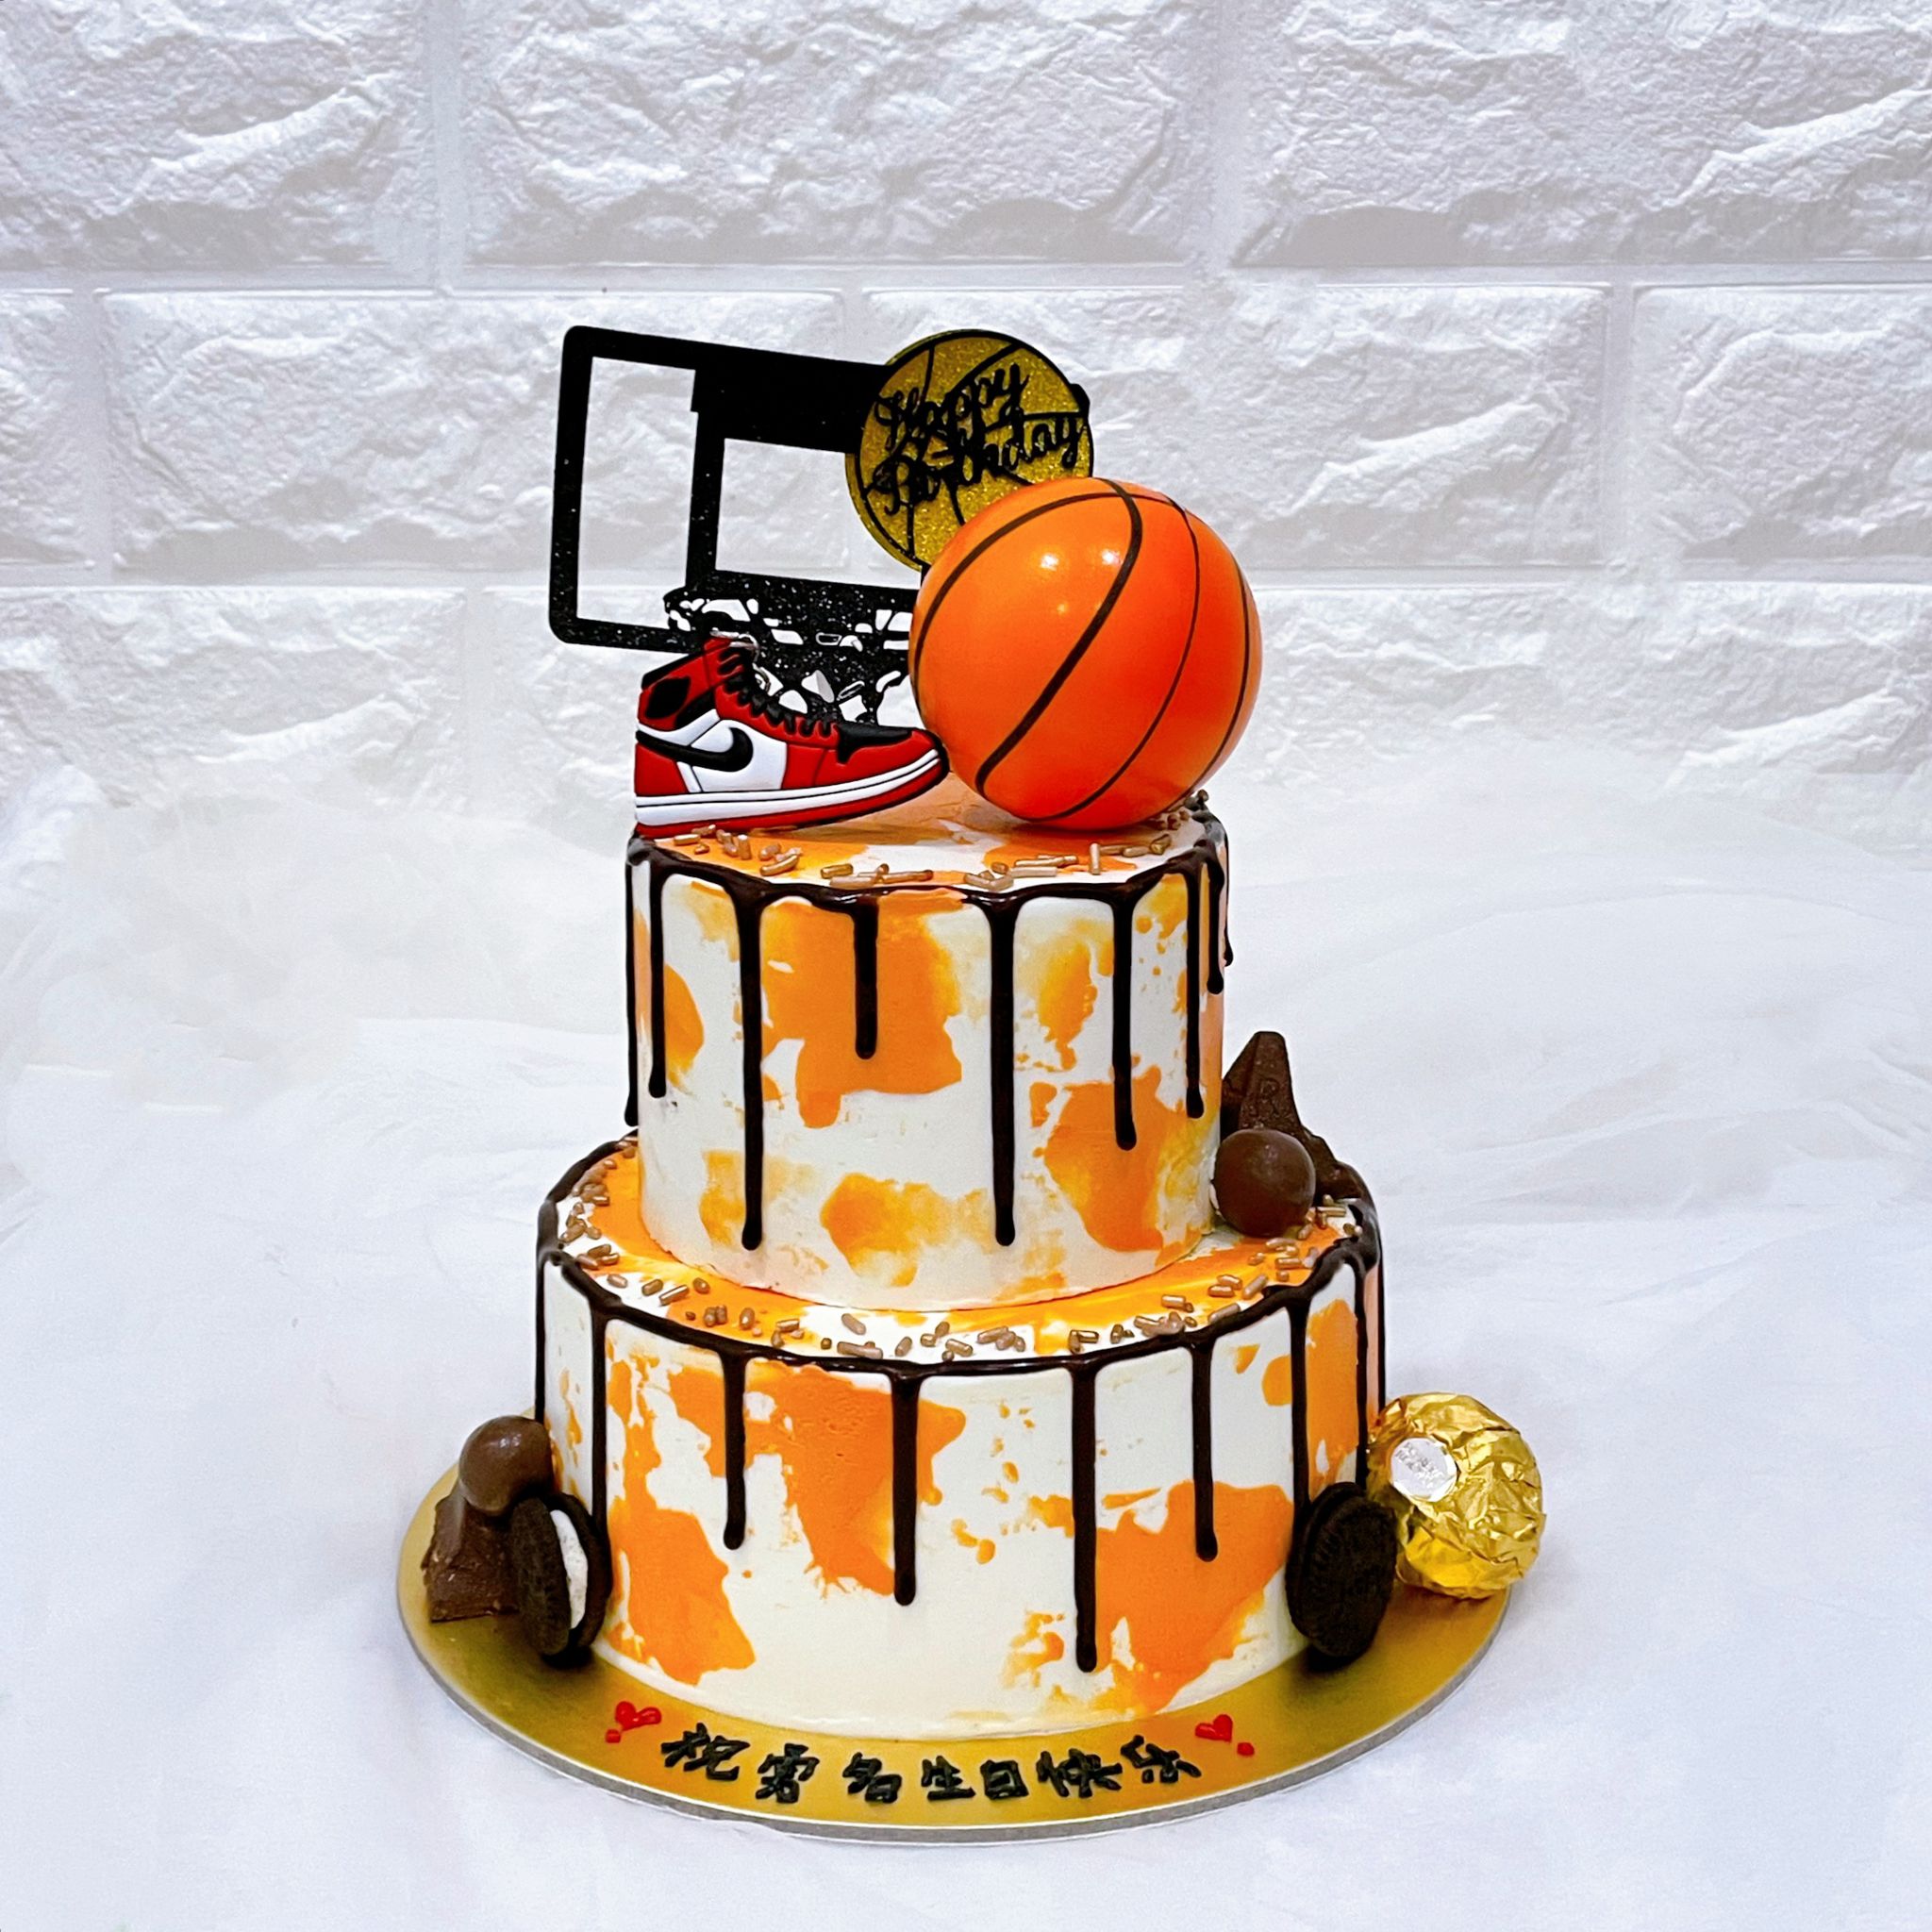 Share More Than 83 Basketball Birthday Cake Latest Indaotaonec 